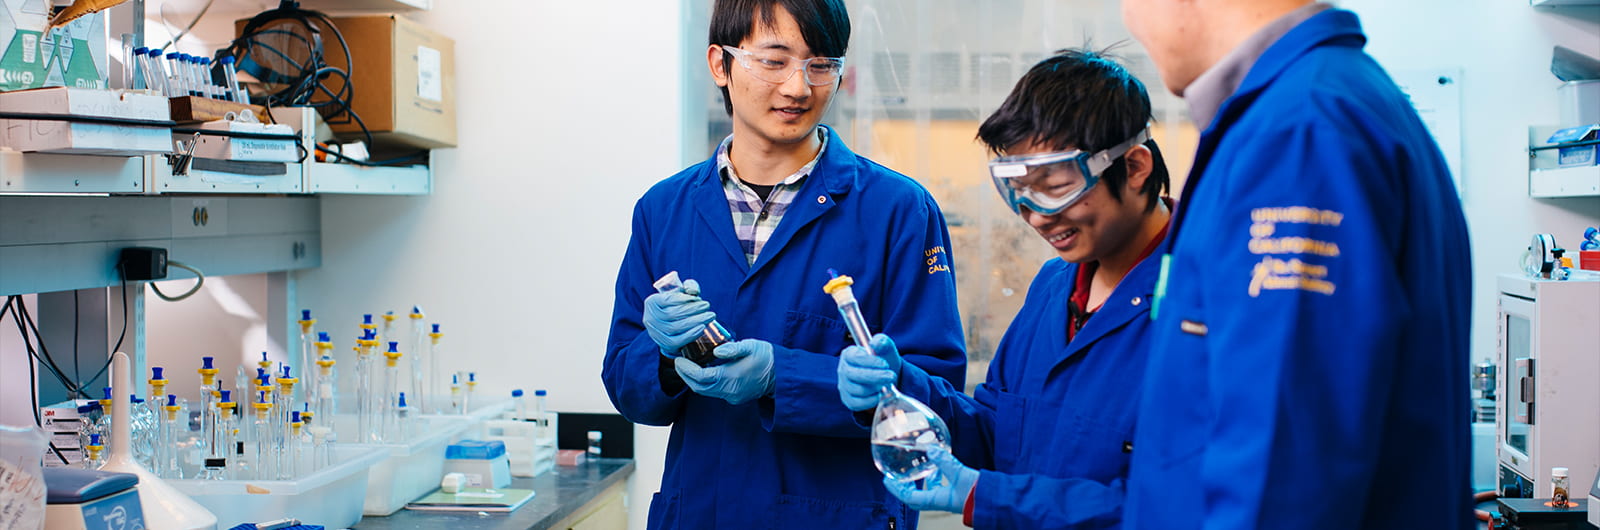 Chemist Shaowei Chen talks to students in lab, UCSC Science, photo credit Elena Zhukova 2019